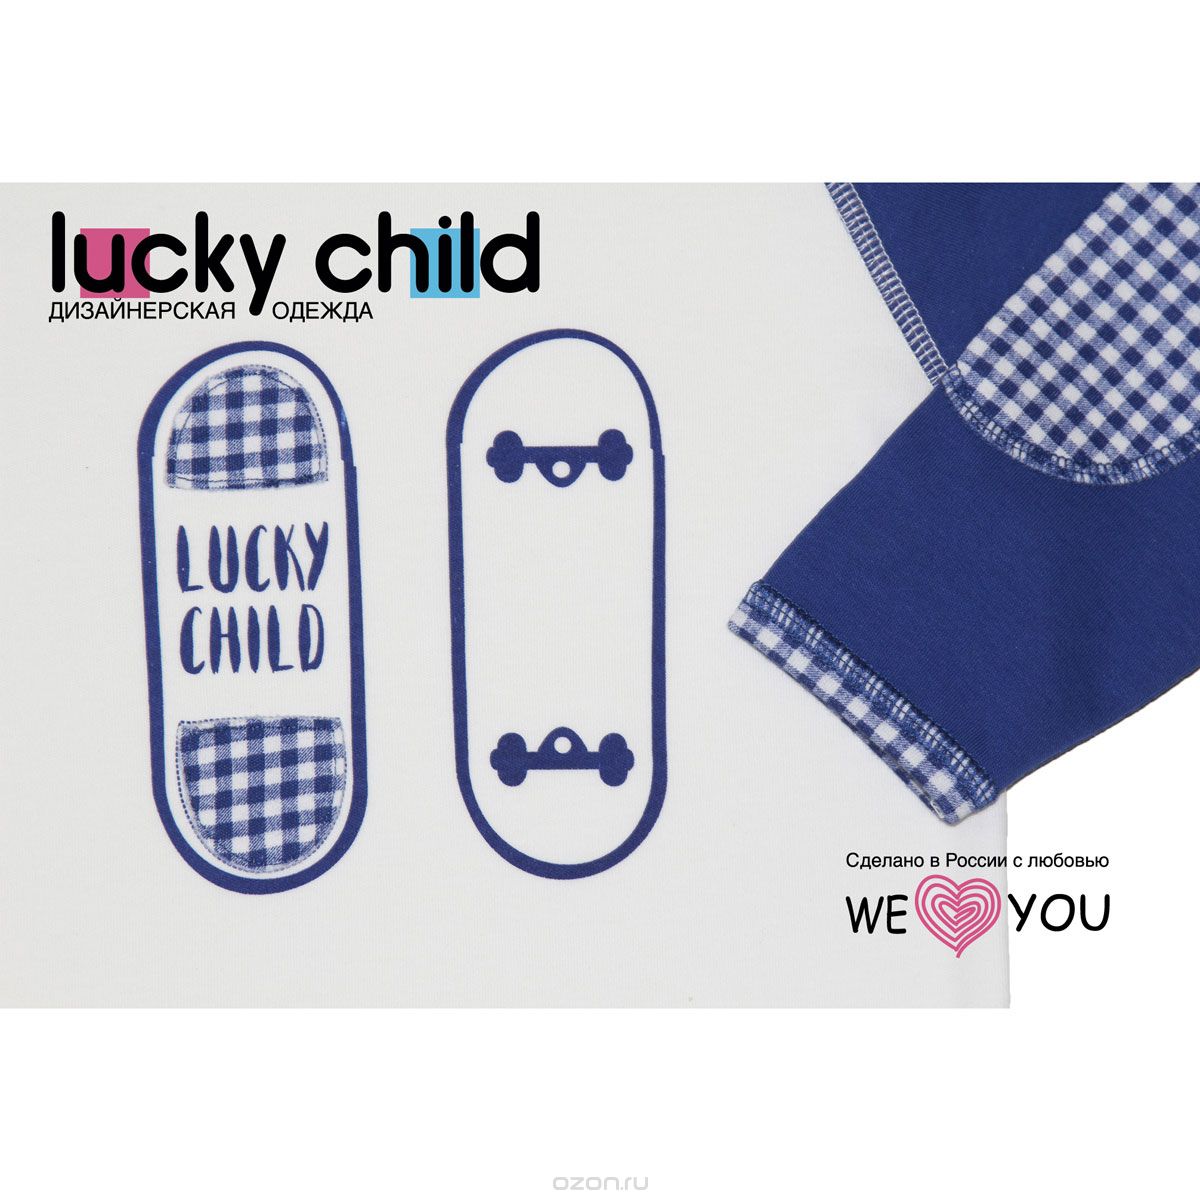    Lucky Child: , , : , . 13-411.  92/98